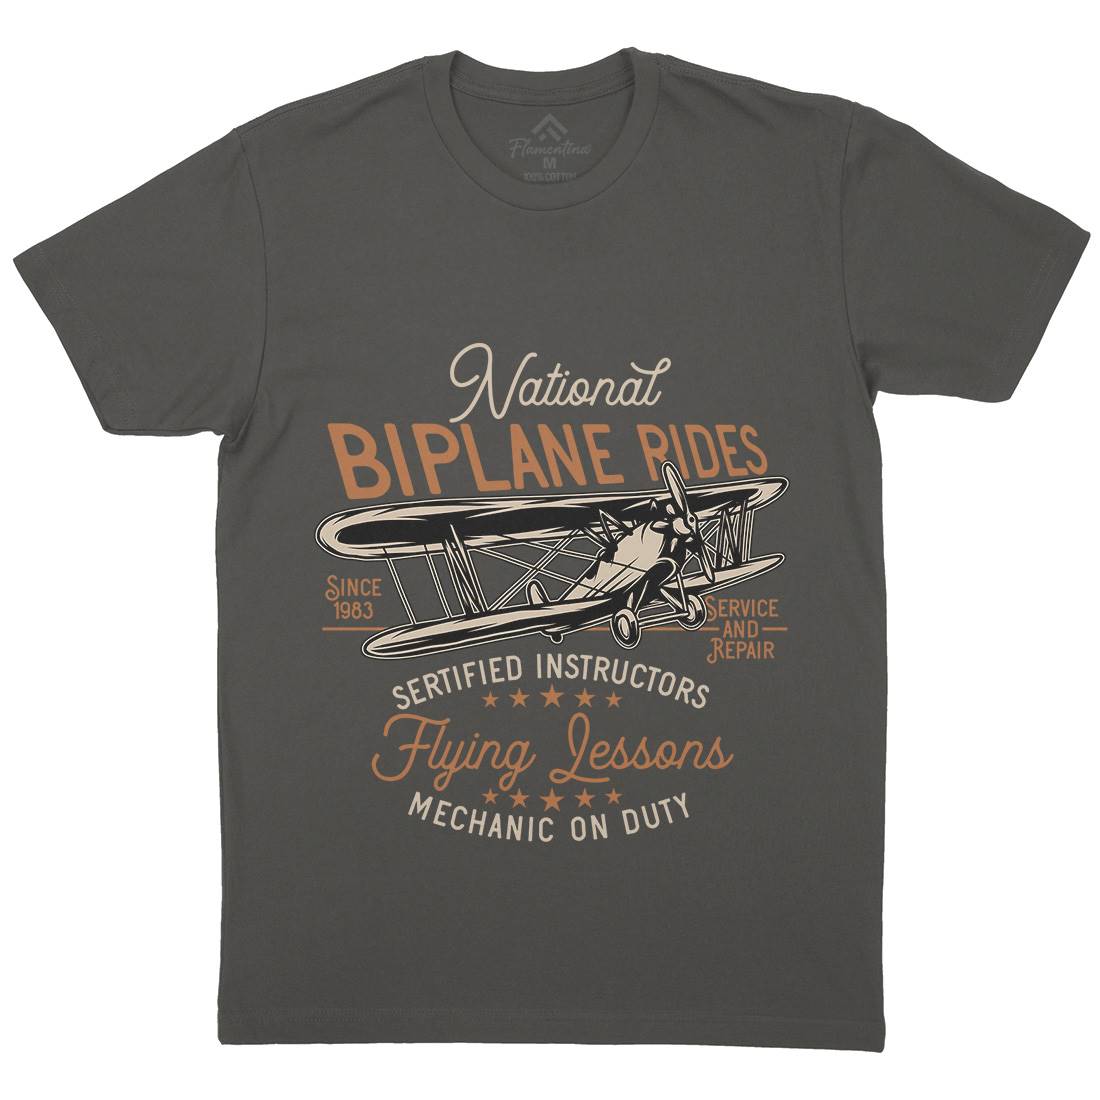 Biplane Rides Mens Crew Neck T-Shirt Vehicles D910